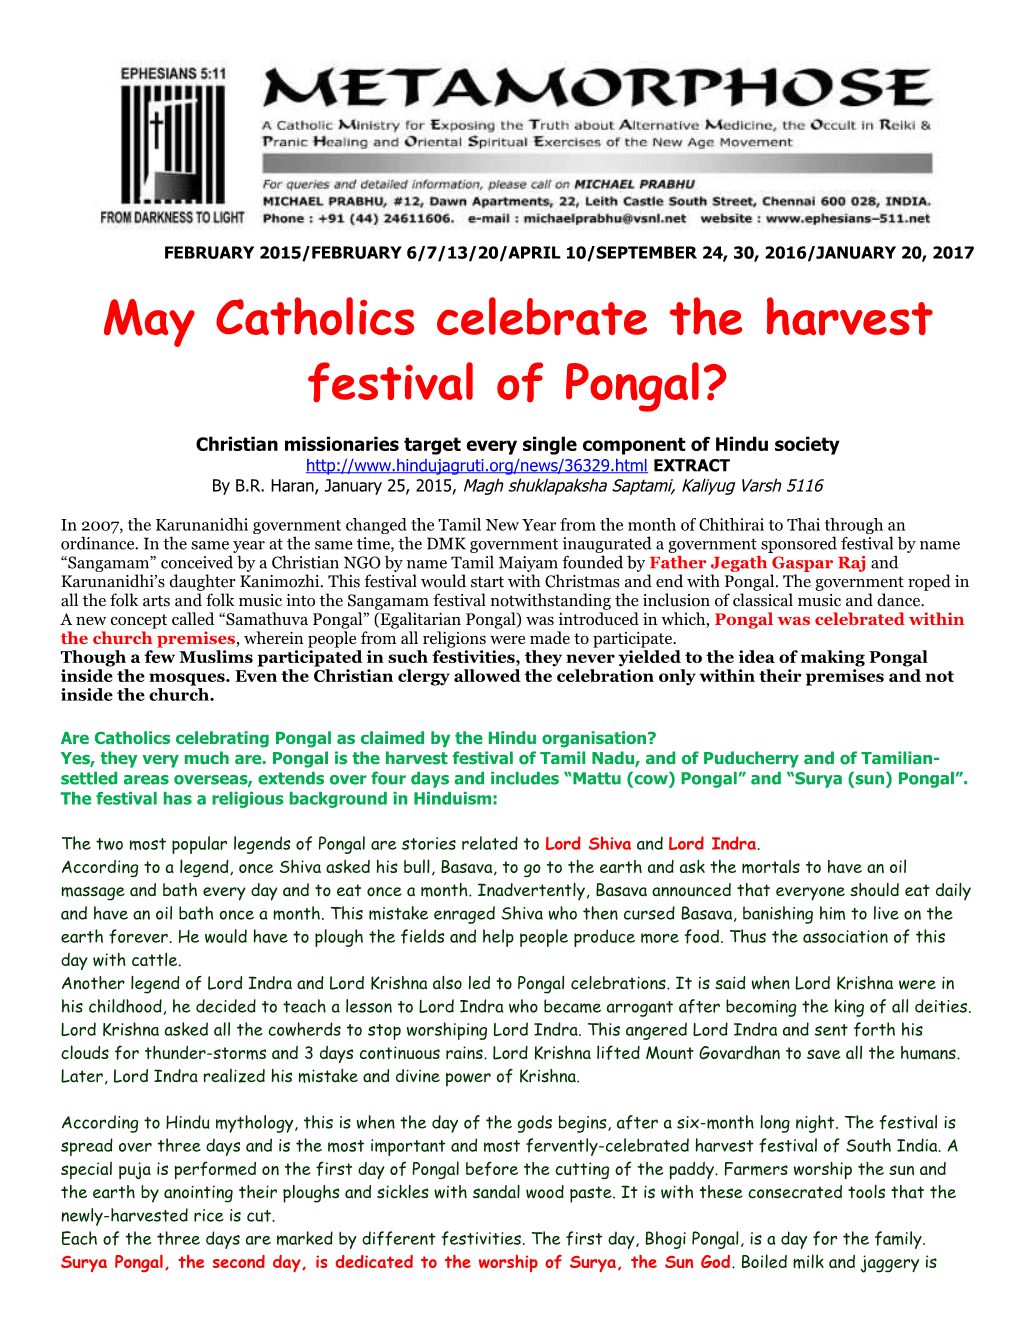 May Catholics Celebrate the Harvest Festival of Pongal?